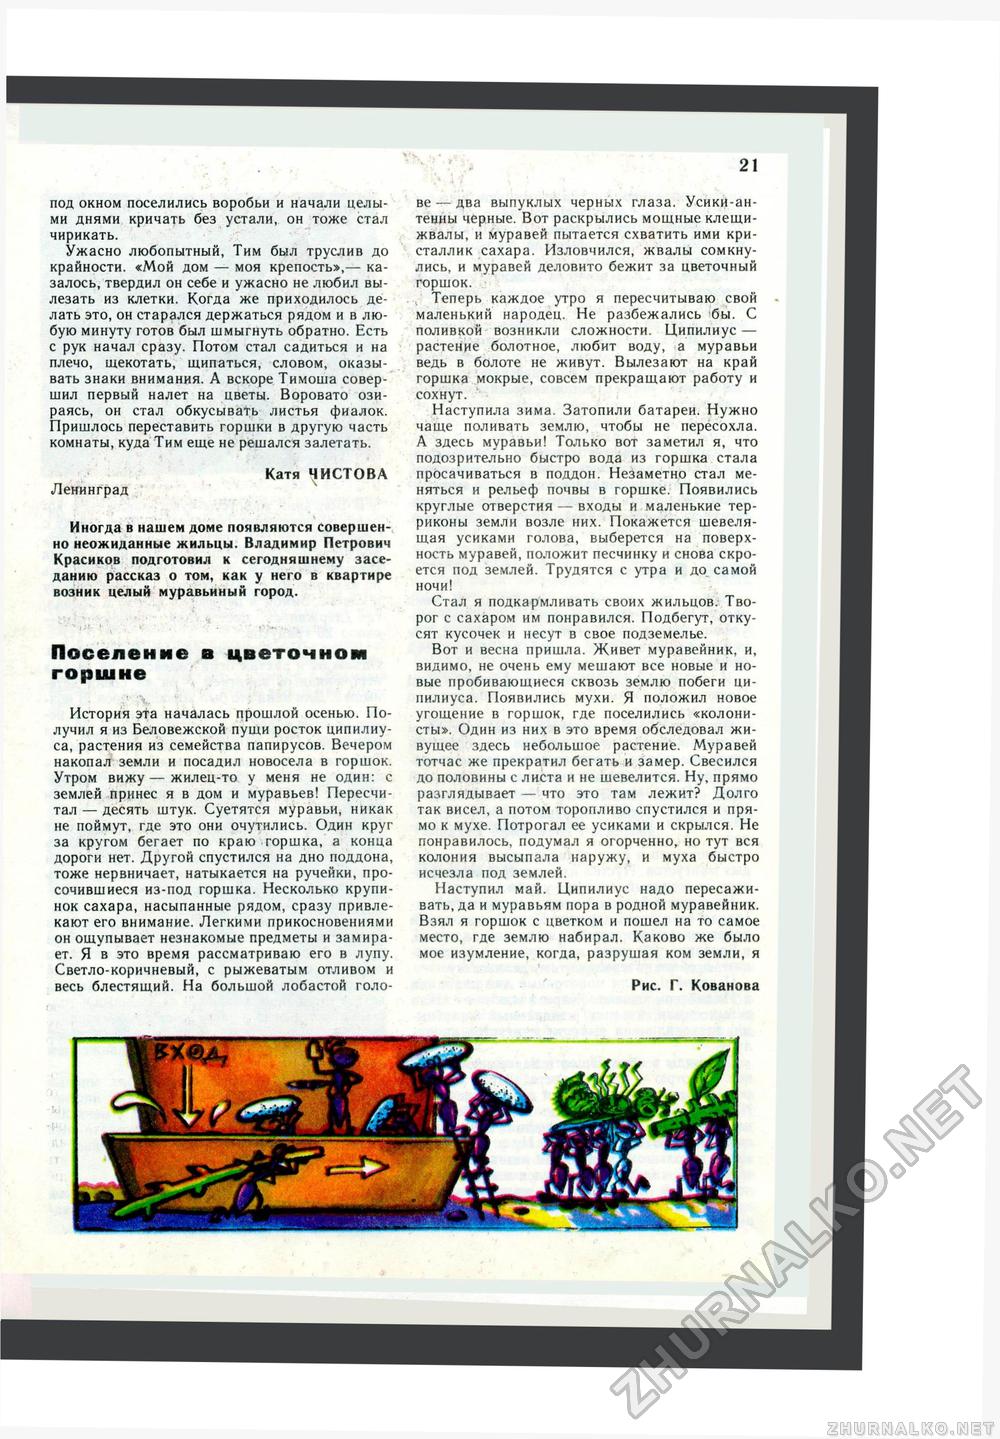 Юный Натуралист 1984-12, страница 22